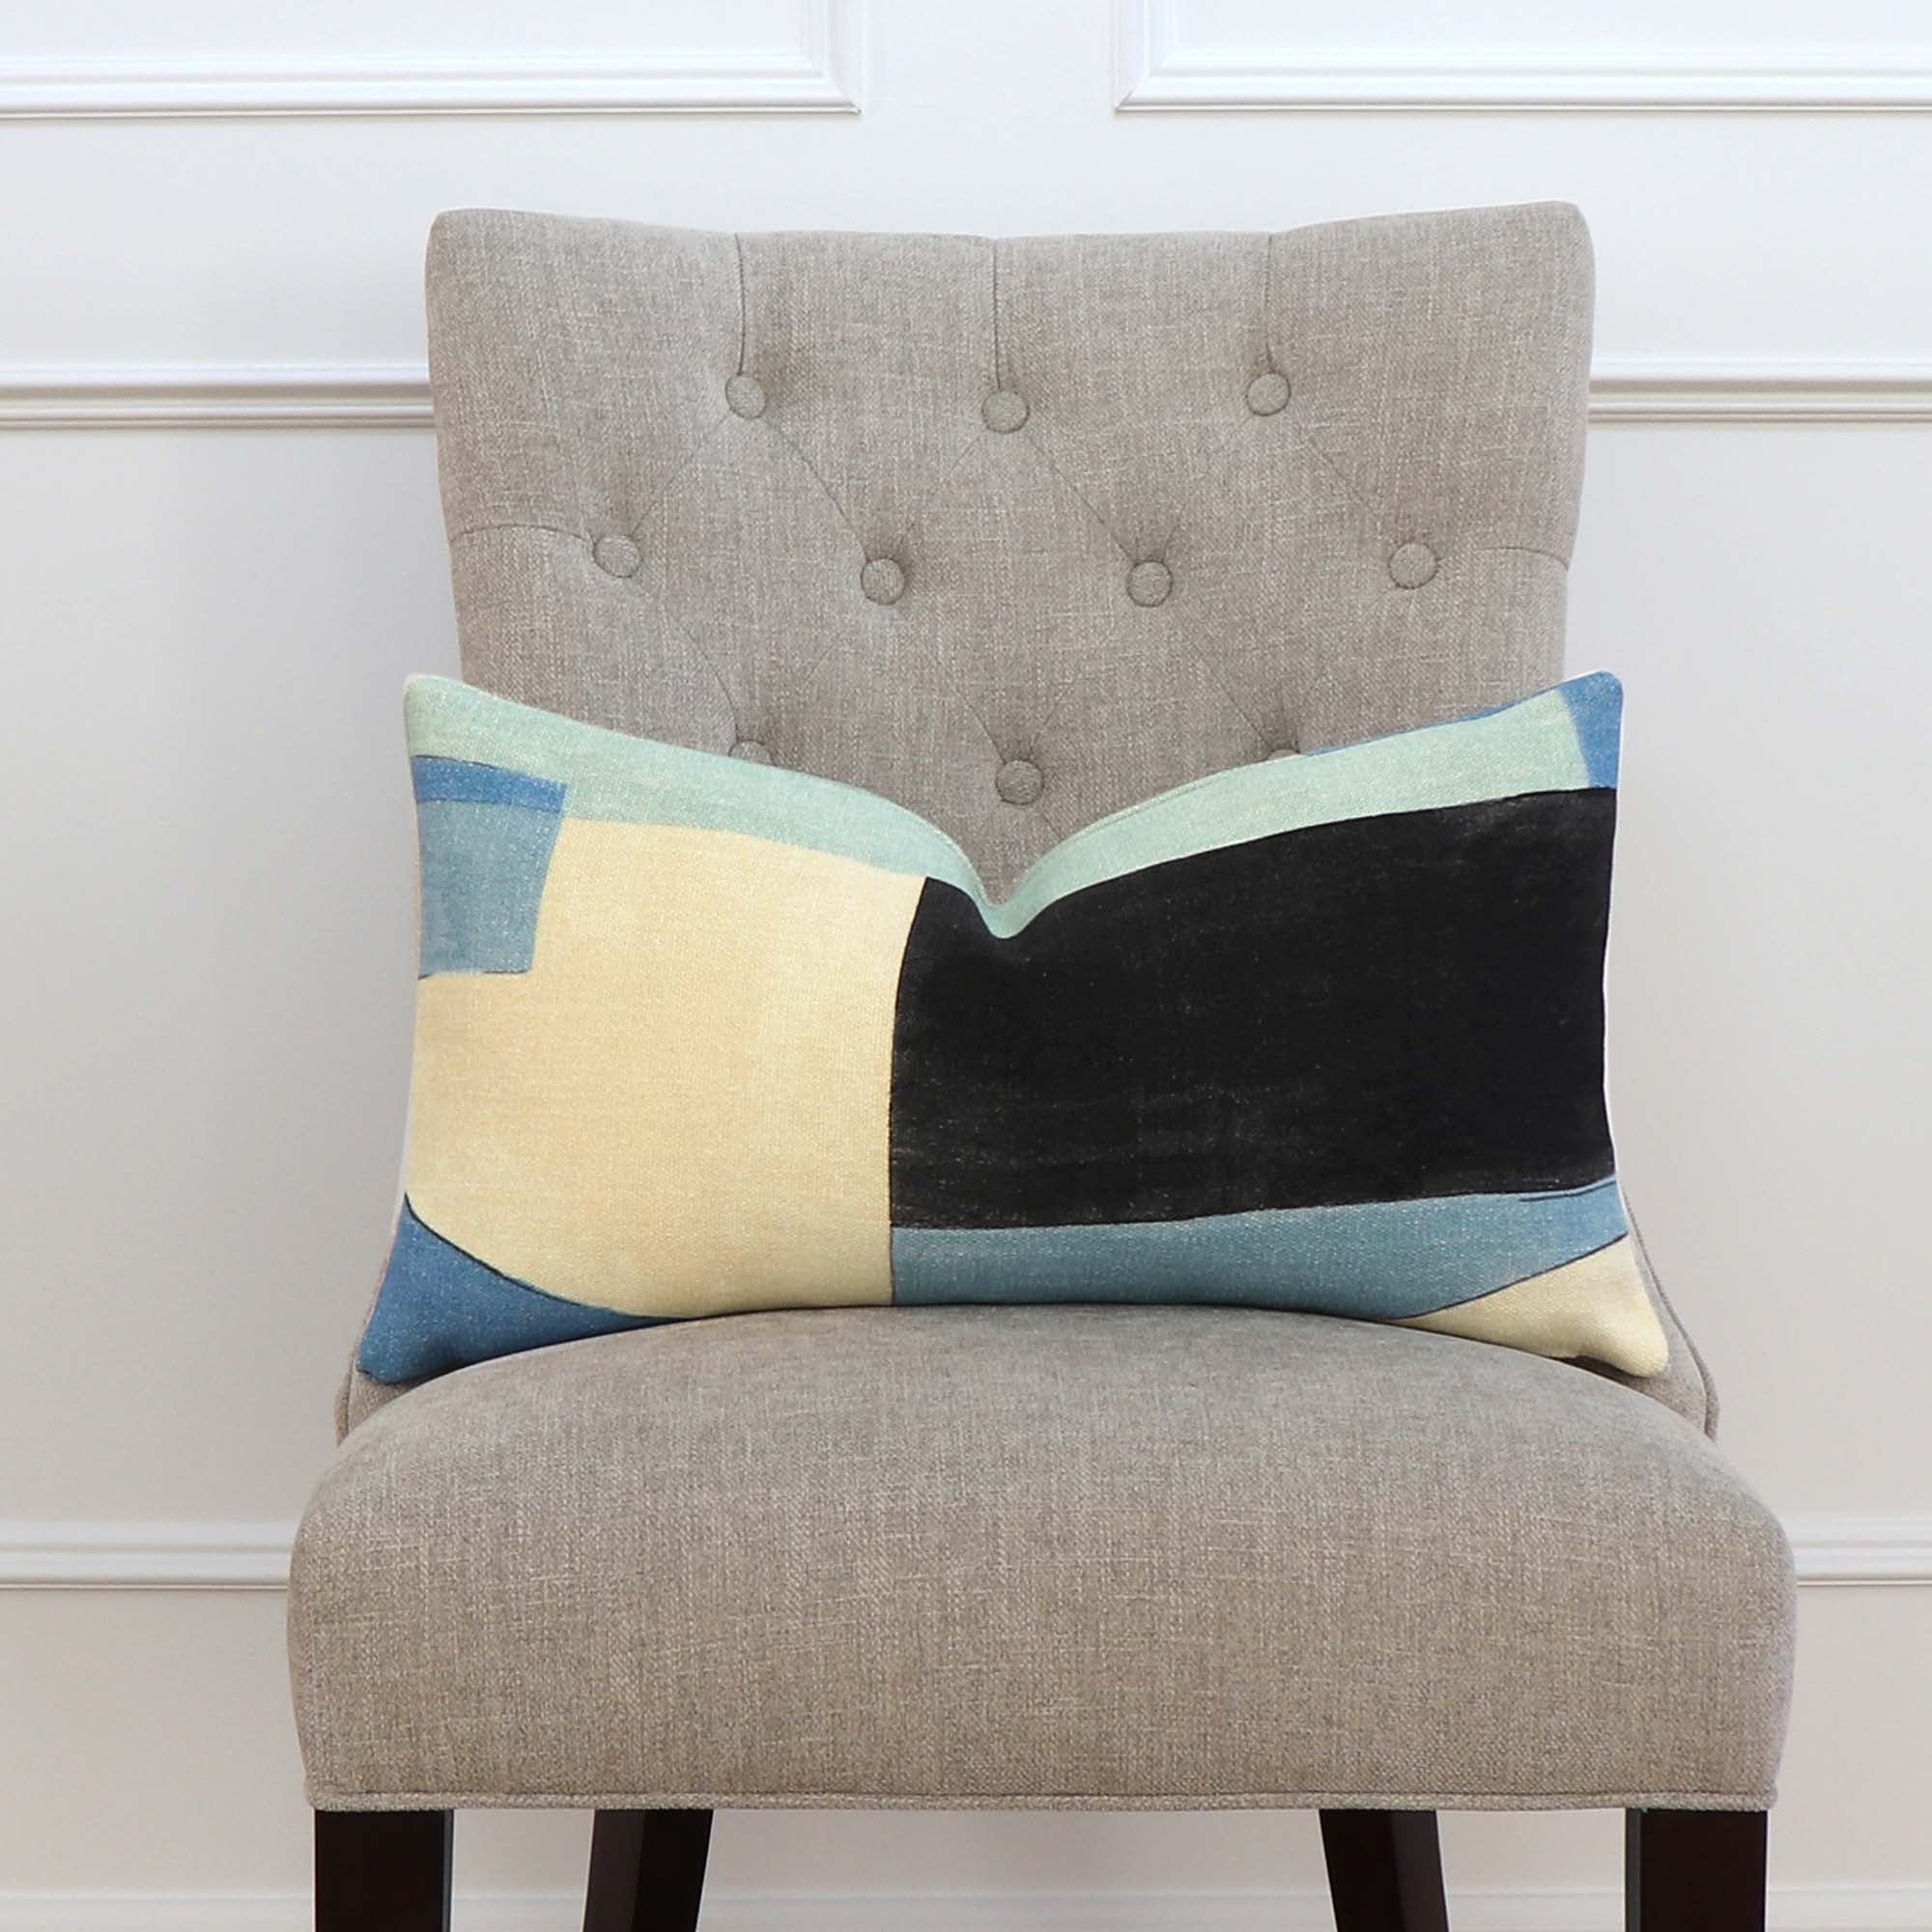 Kelly Wearstler District Cobalt Geometric Designer Lumbar Throw Pillow Cover on Accent Chair